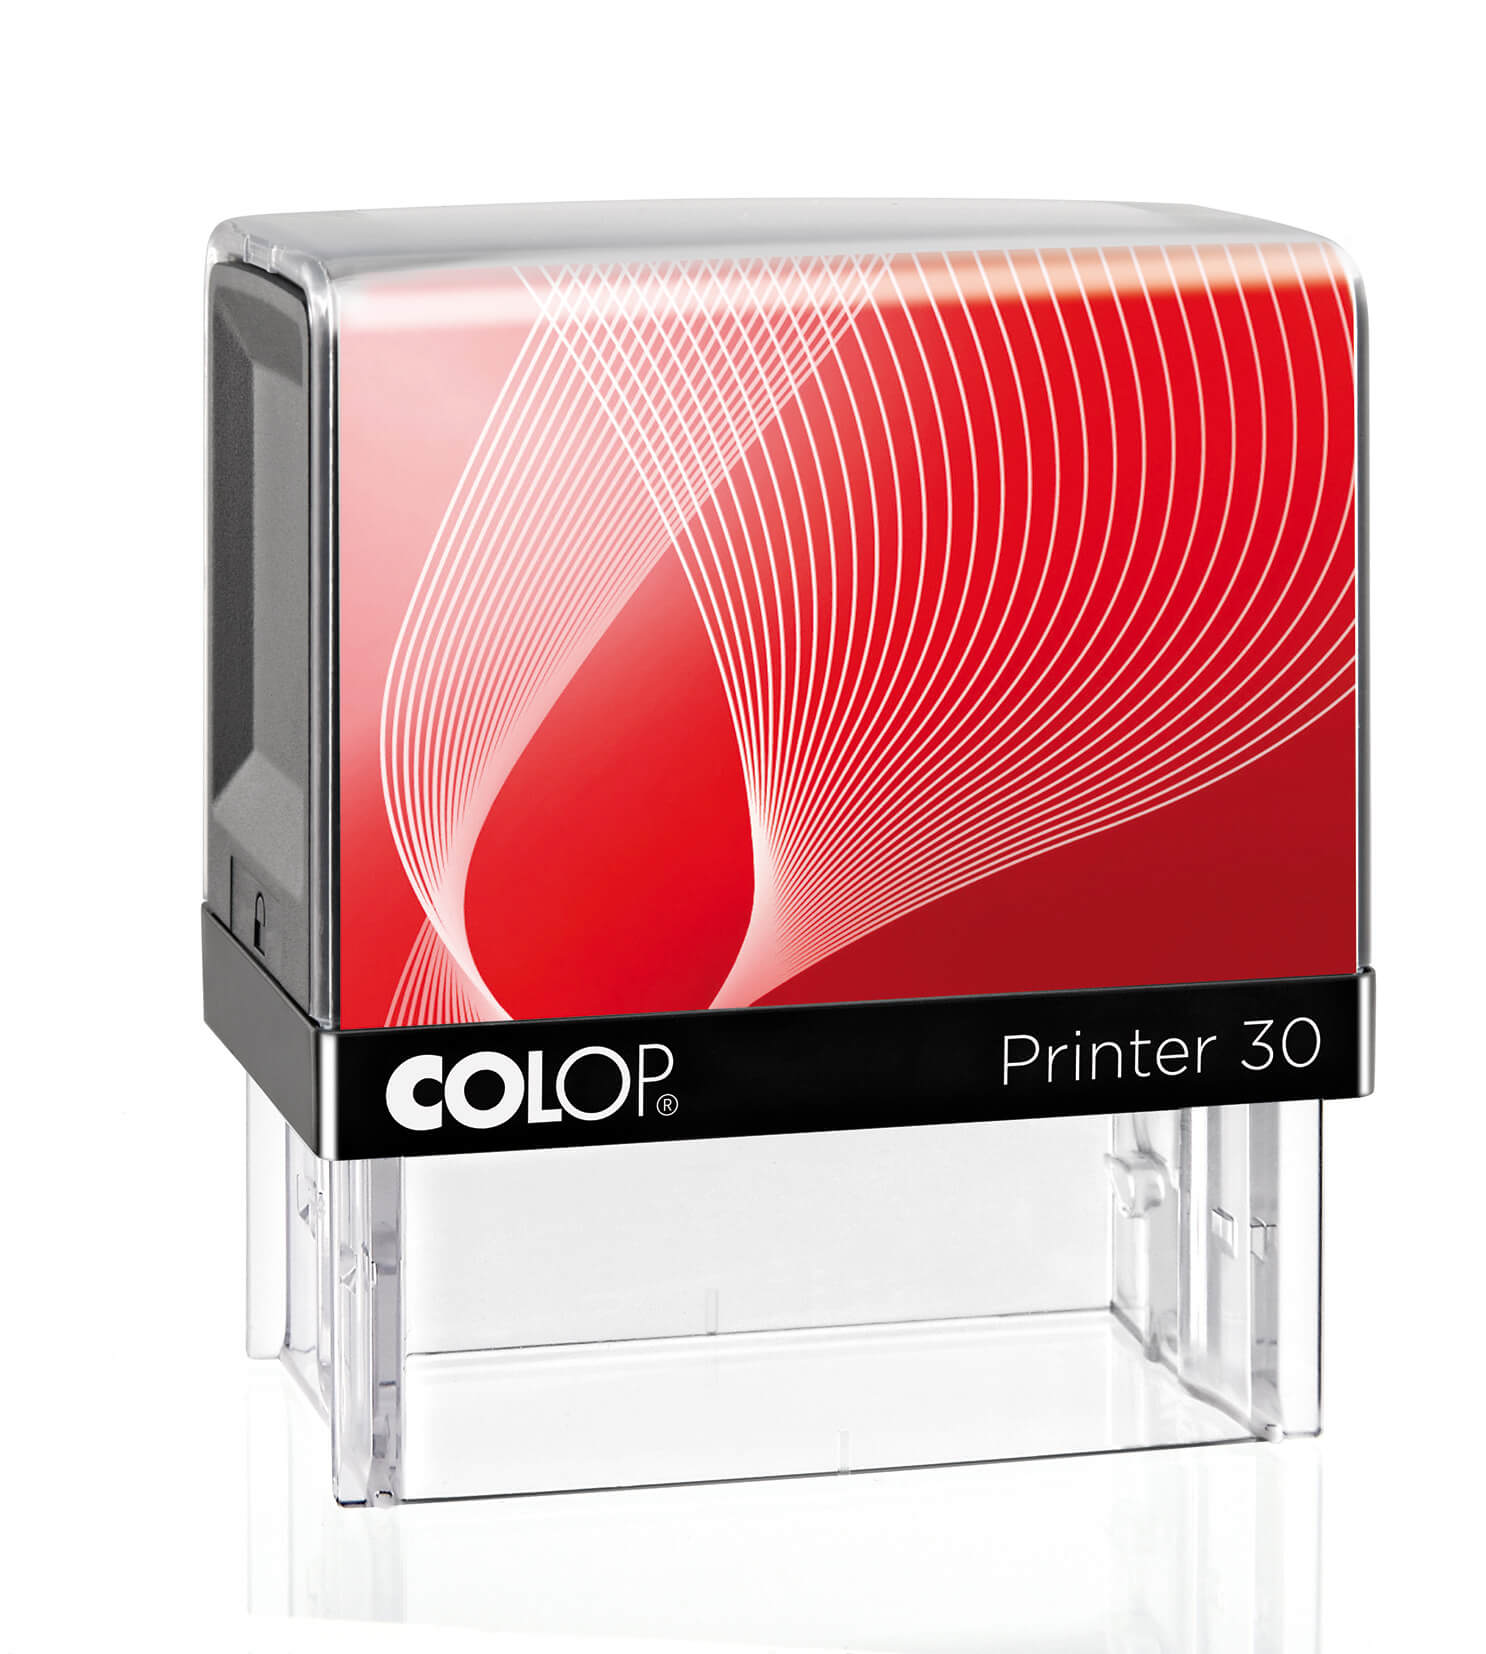  Printer 30